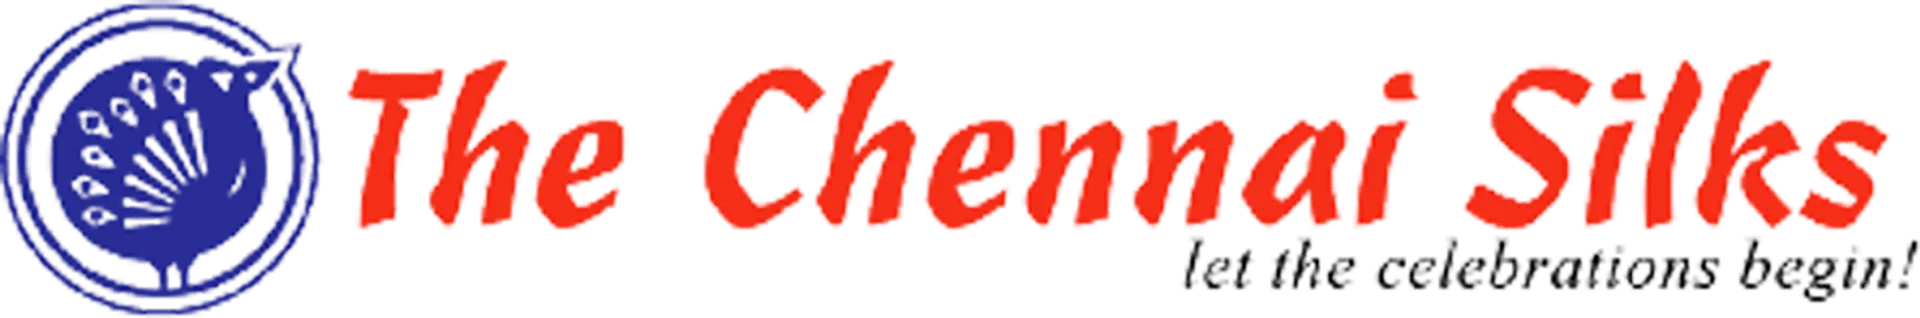 THE CHENNAI SILKS logo. Current catalogue